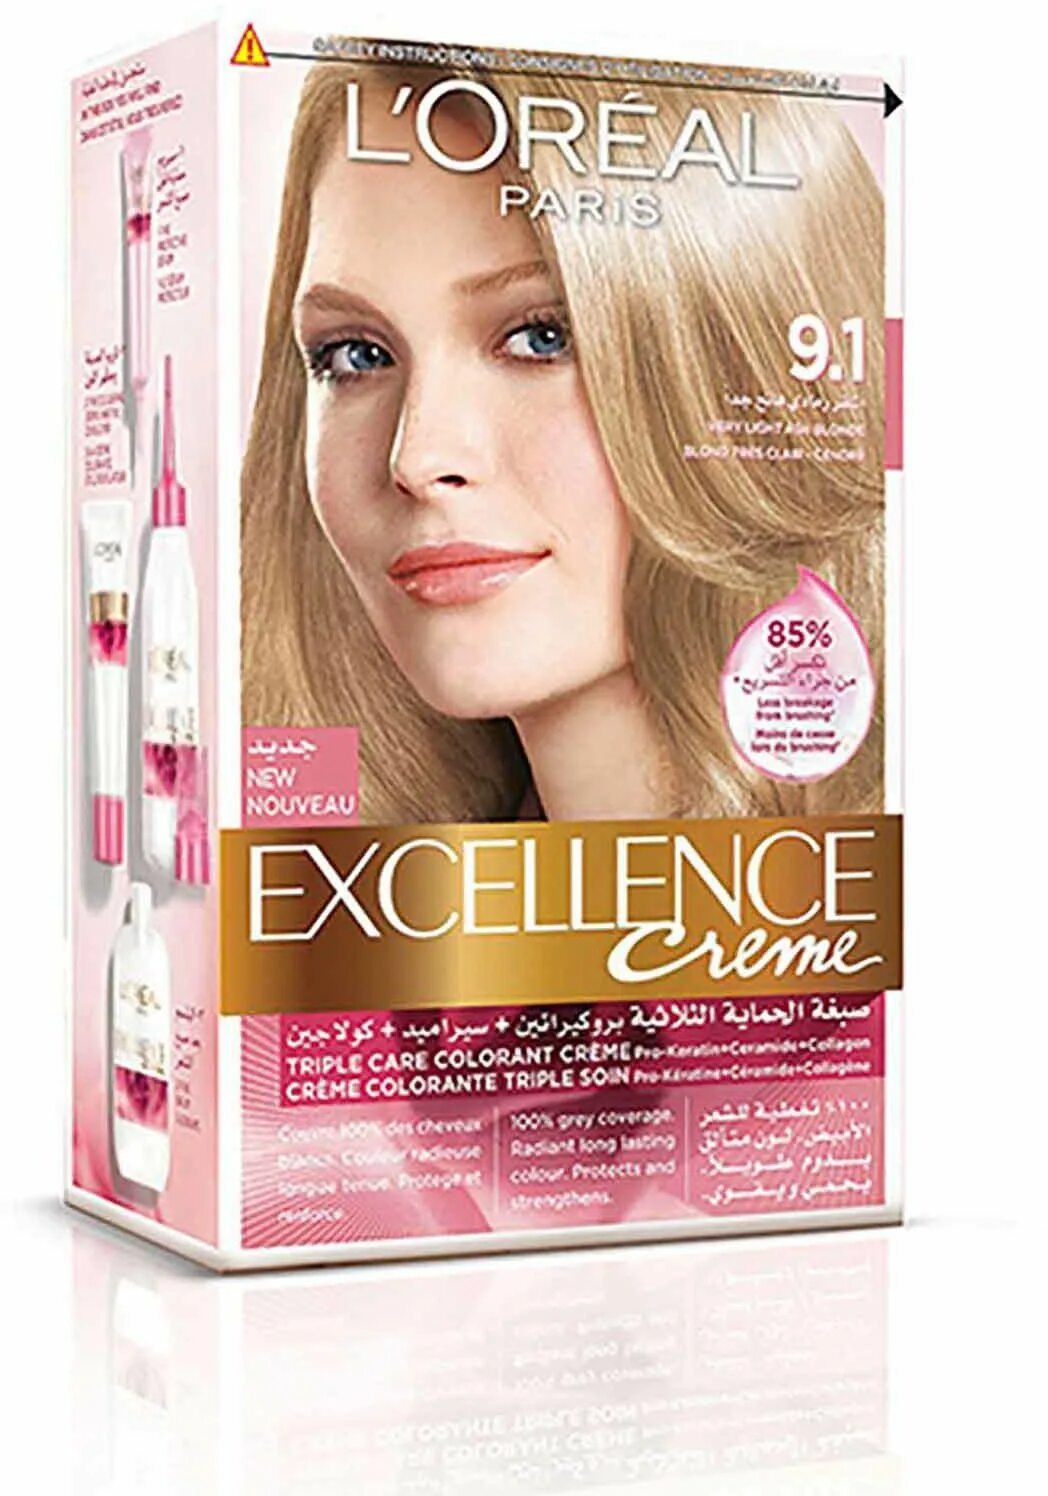 Loreal Excellence Creme 9.1. Краска для волос лореаль экселанс. Лореаль Париж экселанс. L'Oreal Paris краска 9.1.